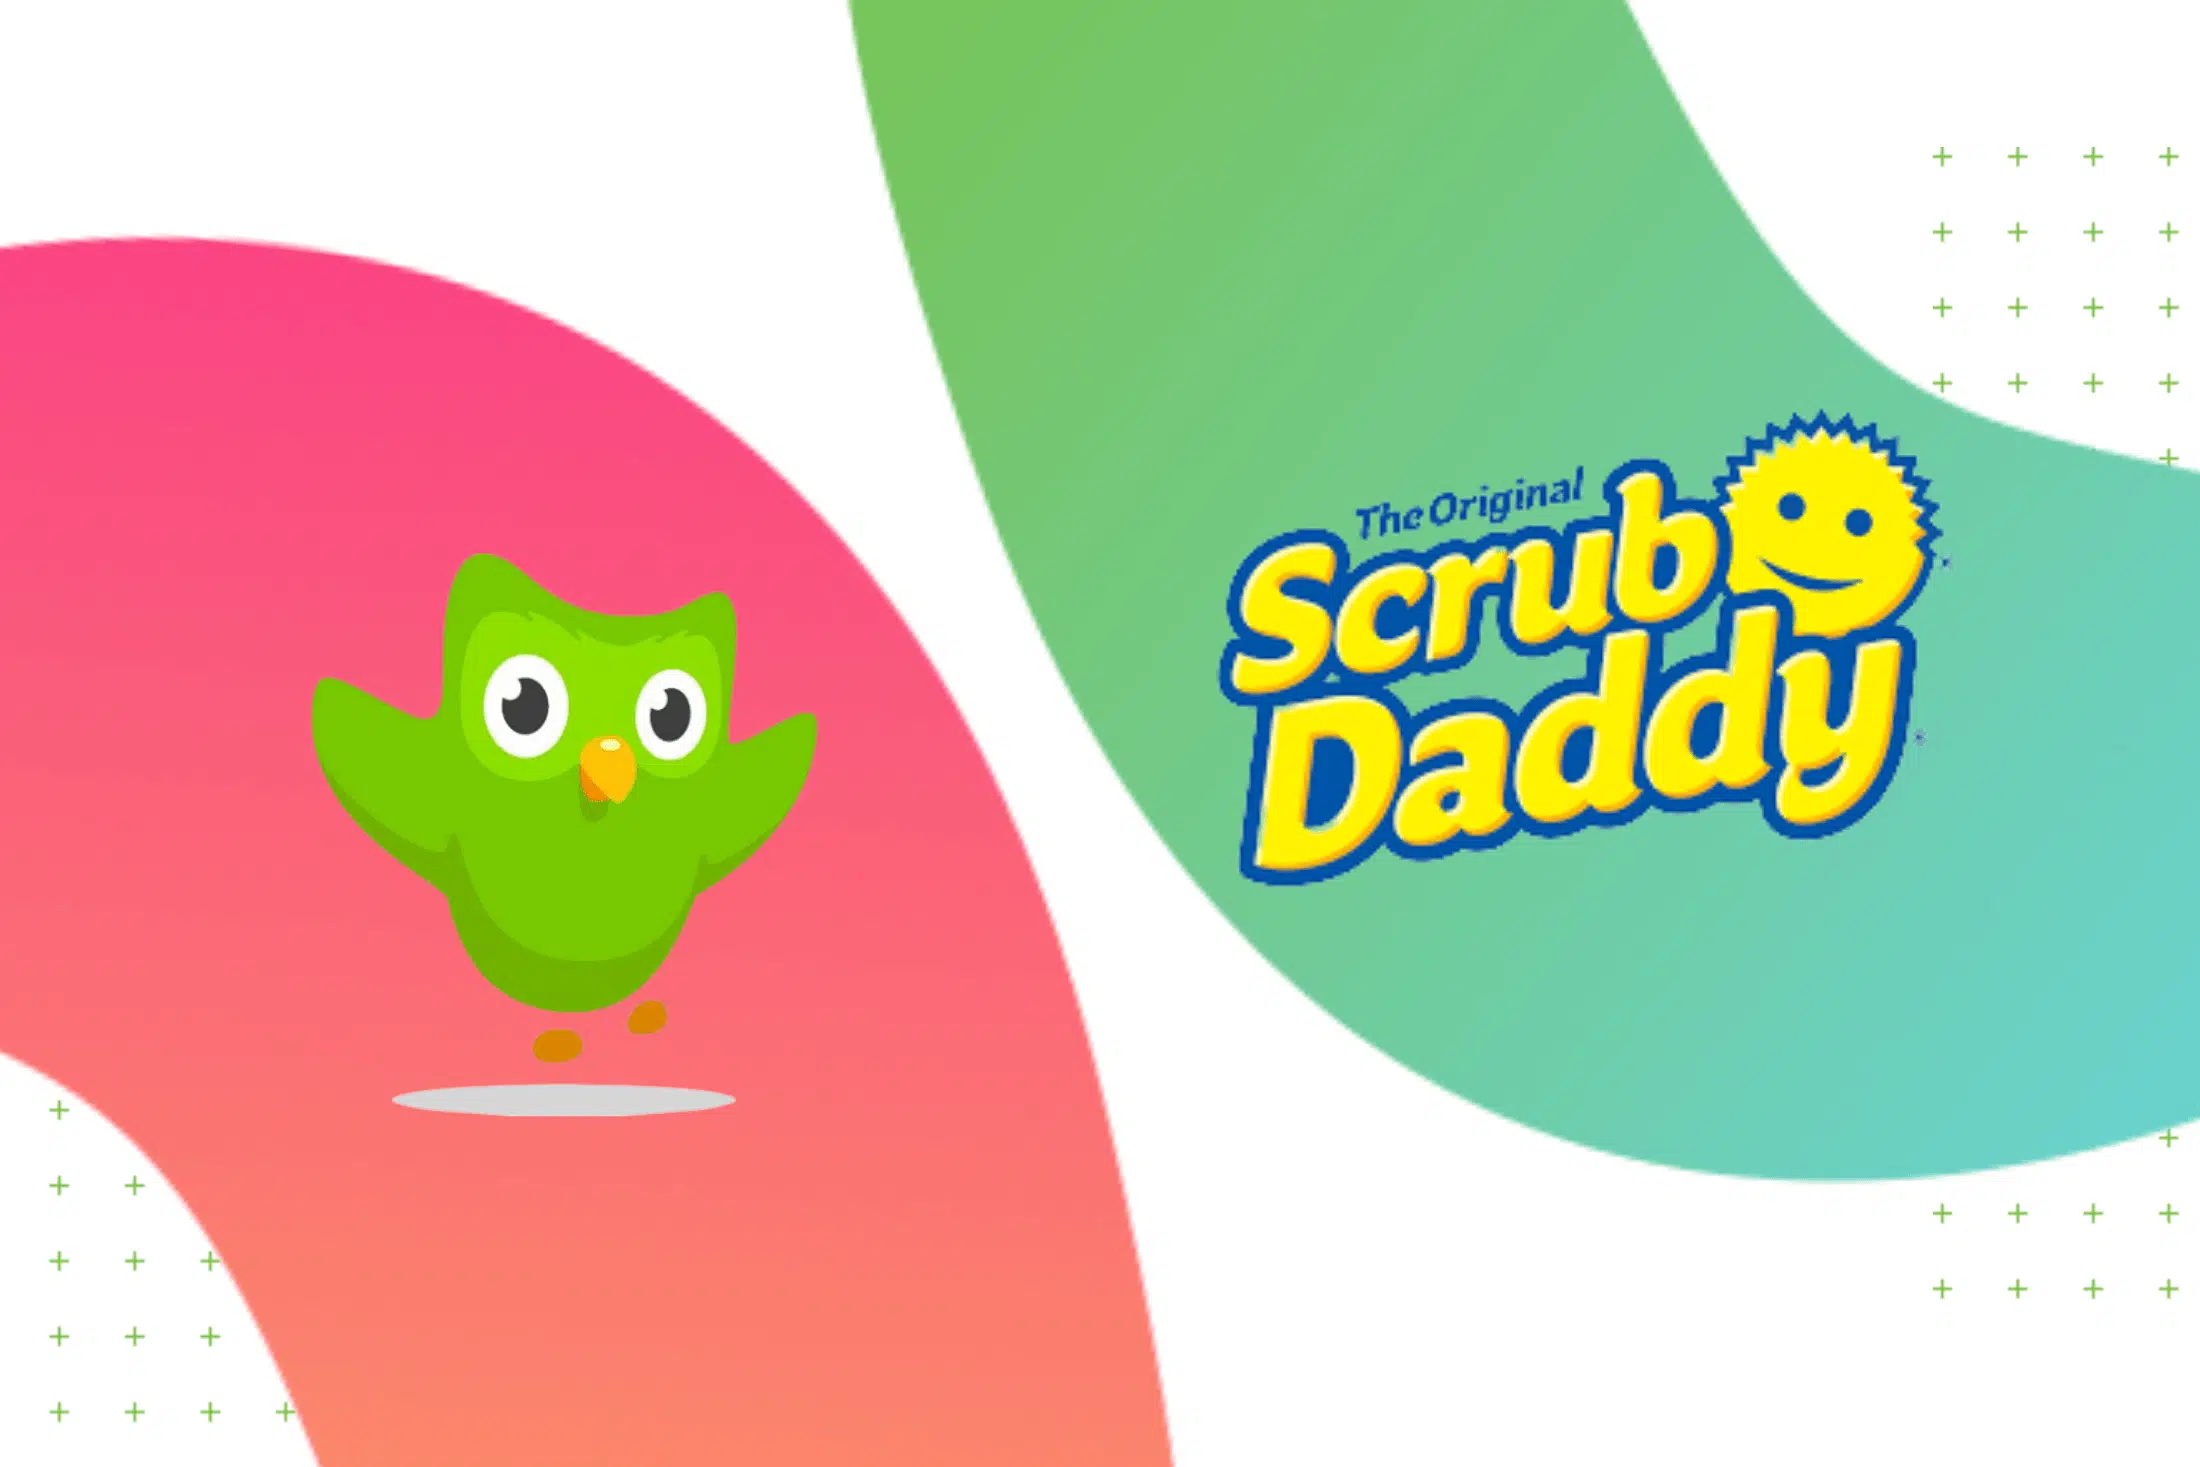 duolingo and scrub daddy disruptive marketing